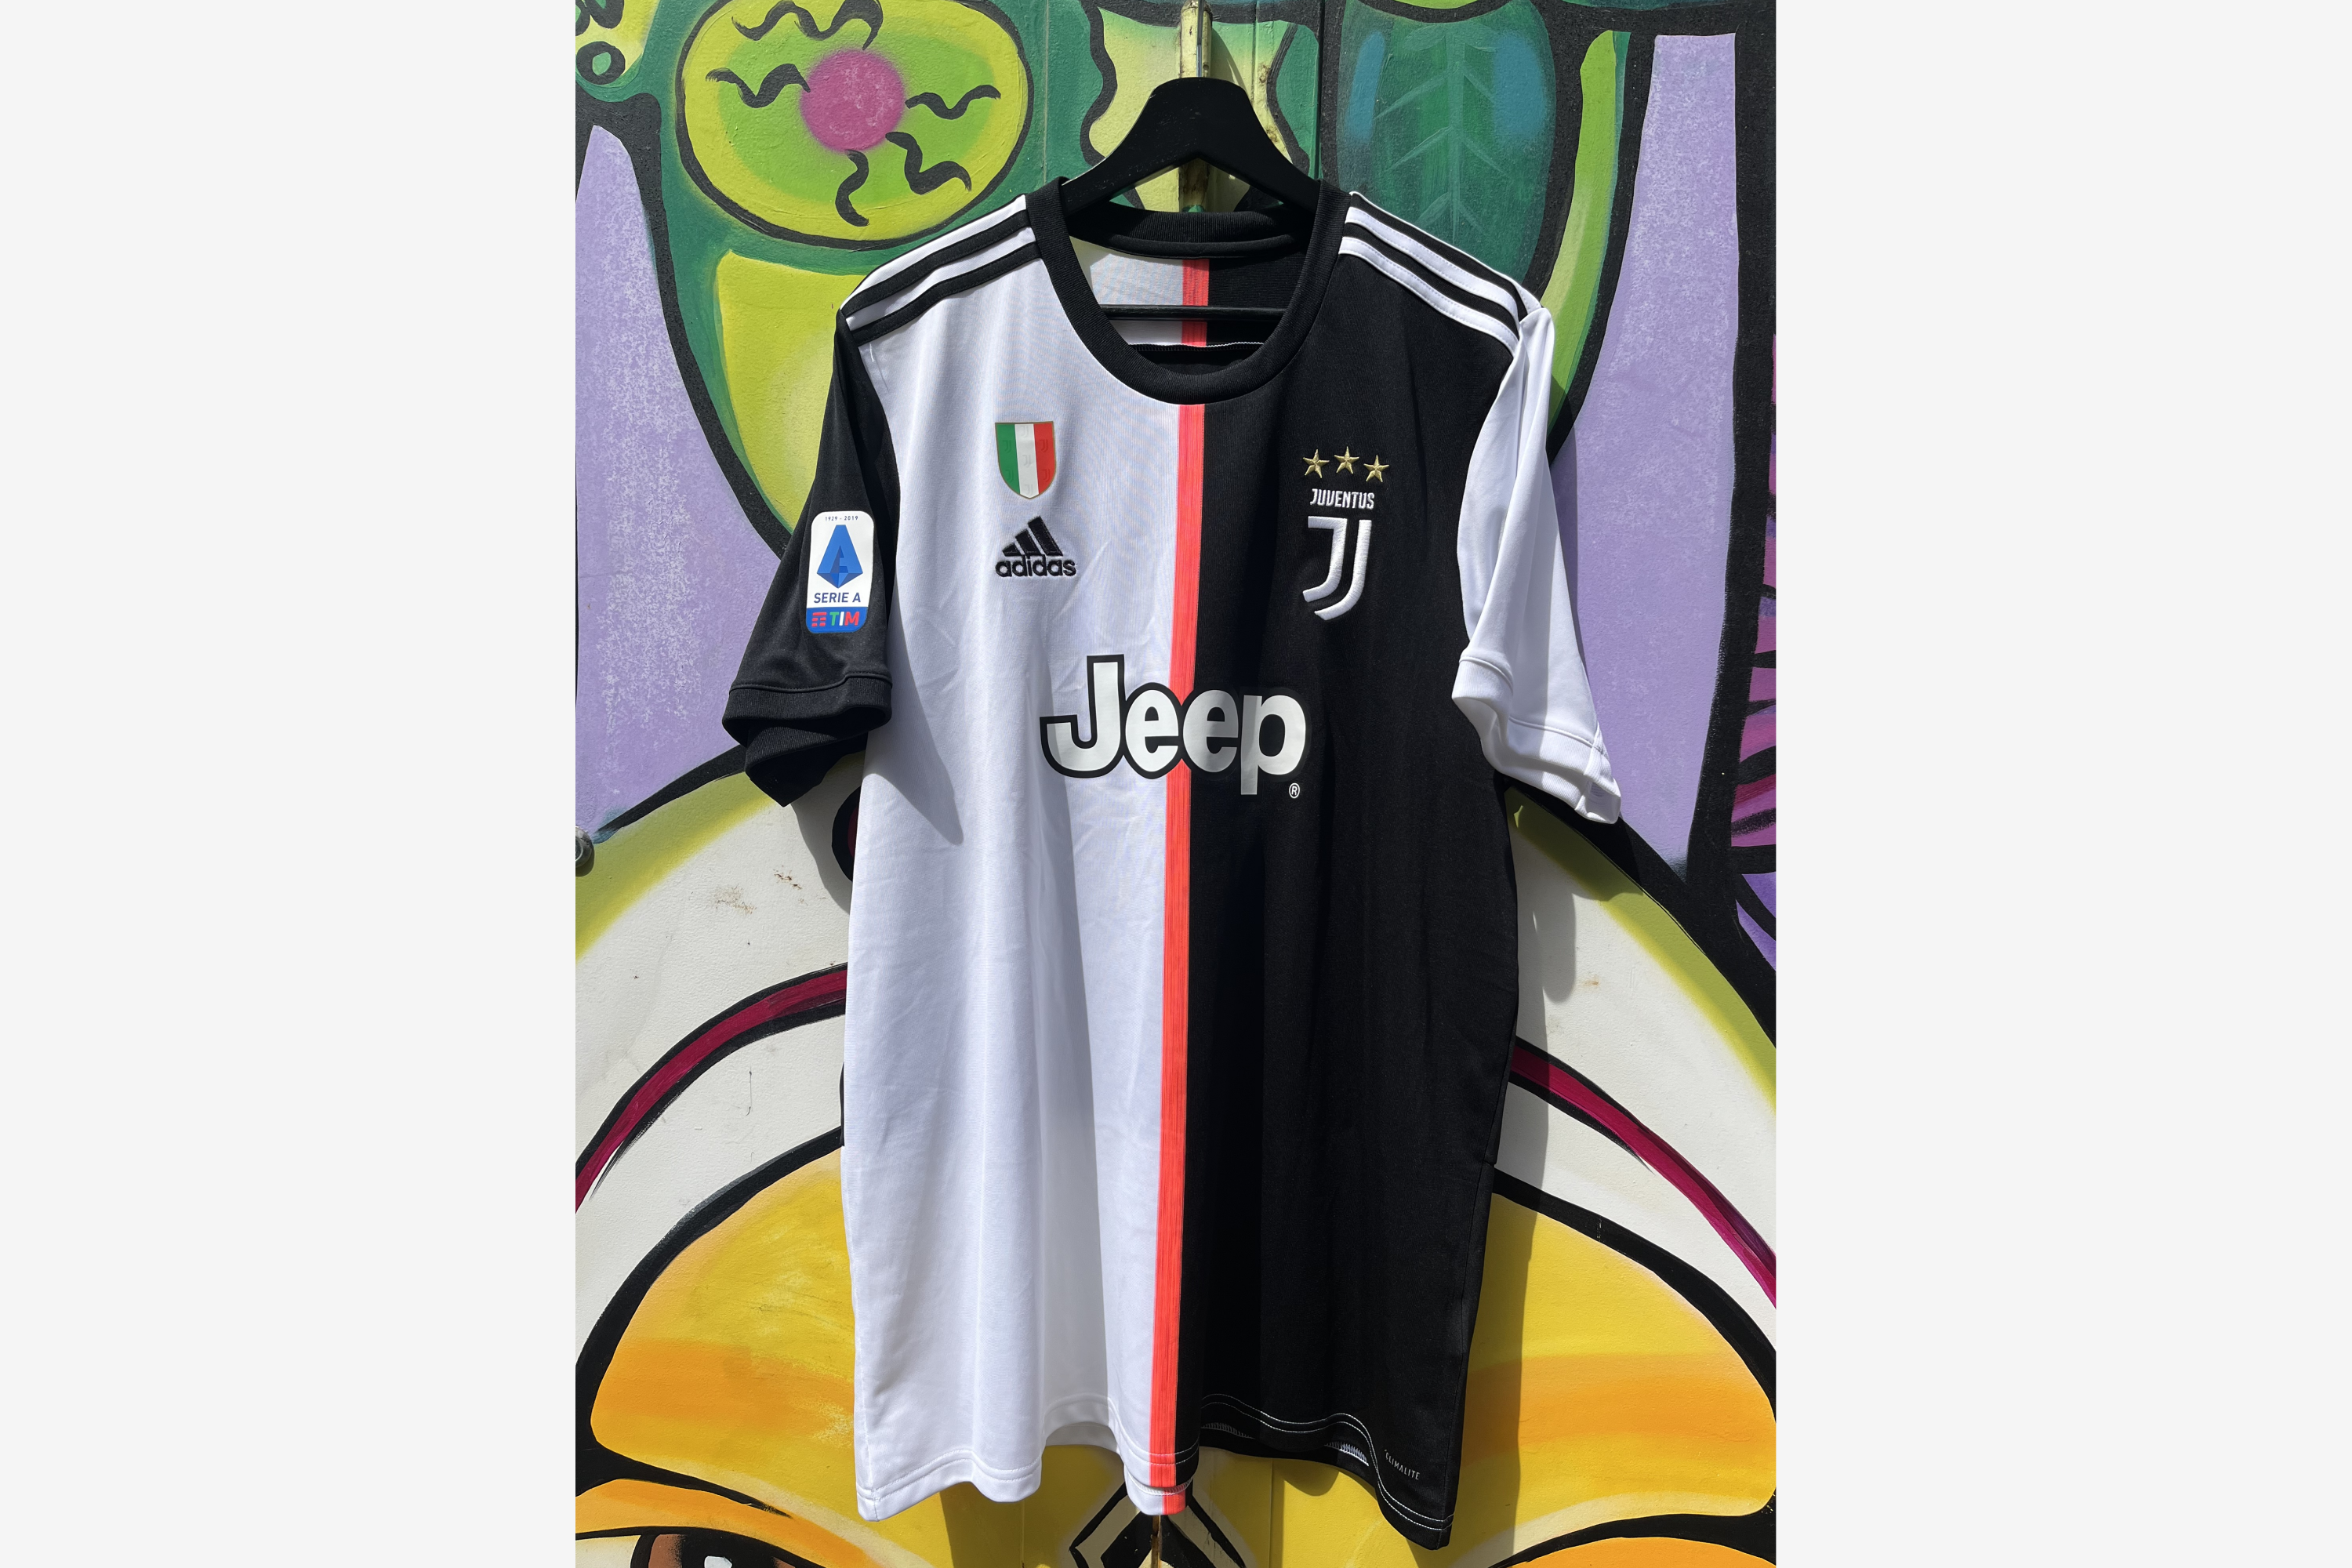 Adidas - Juventus 2019/20 Home Football Shirt 'DE LIGT' (Fan Edition)